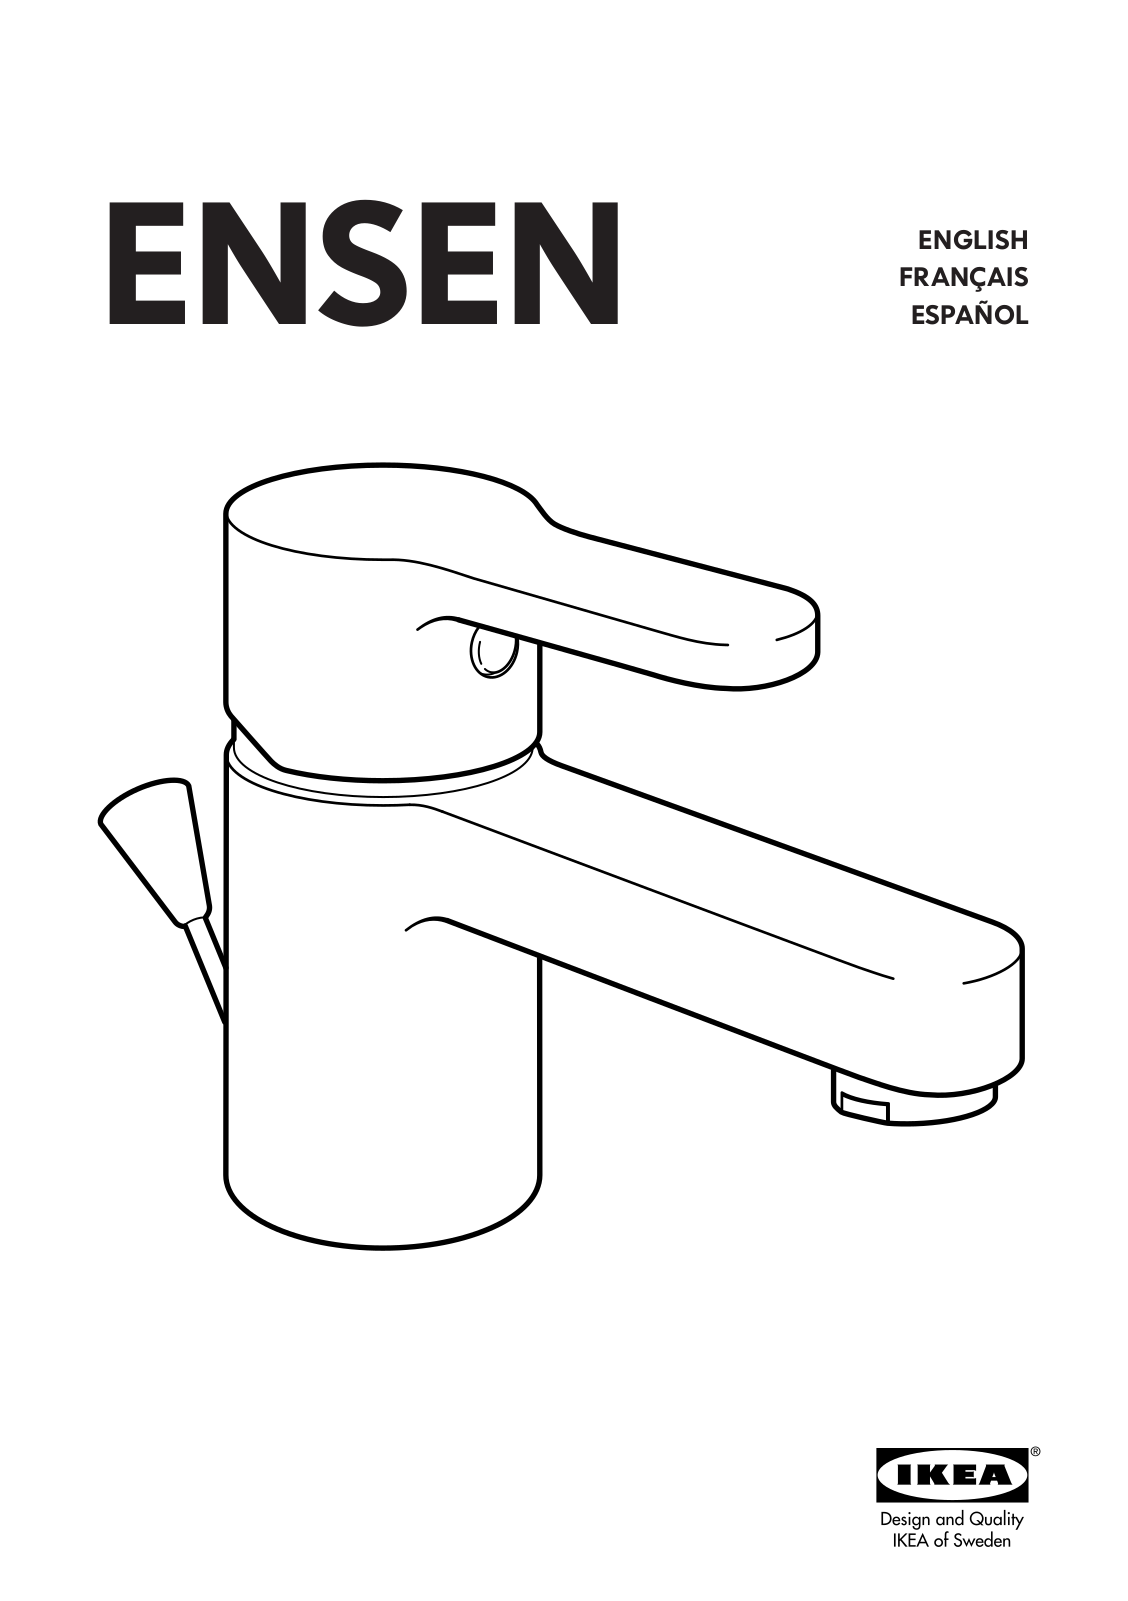 IKEA ENSEN BATH FAUCET/STORAGE User Manual